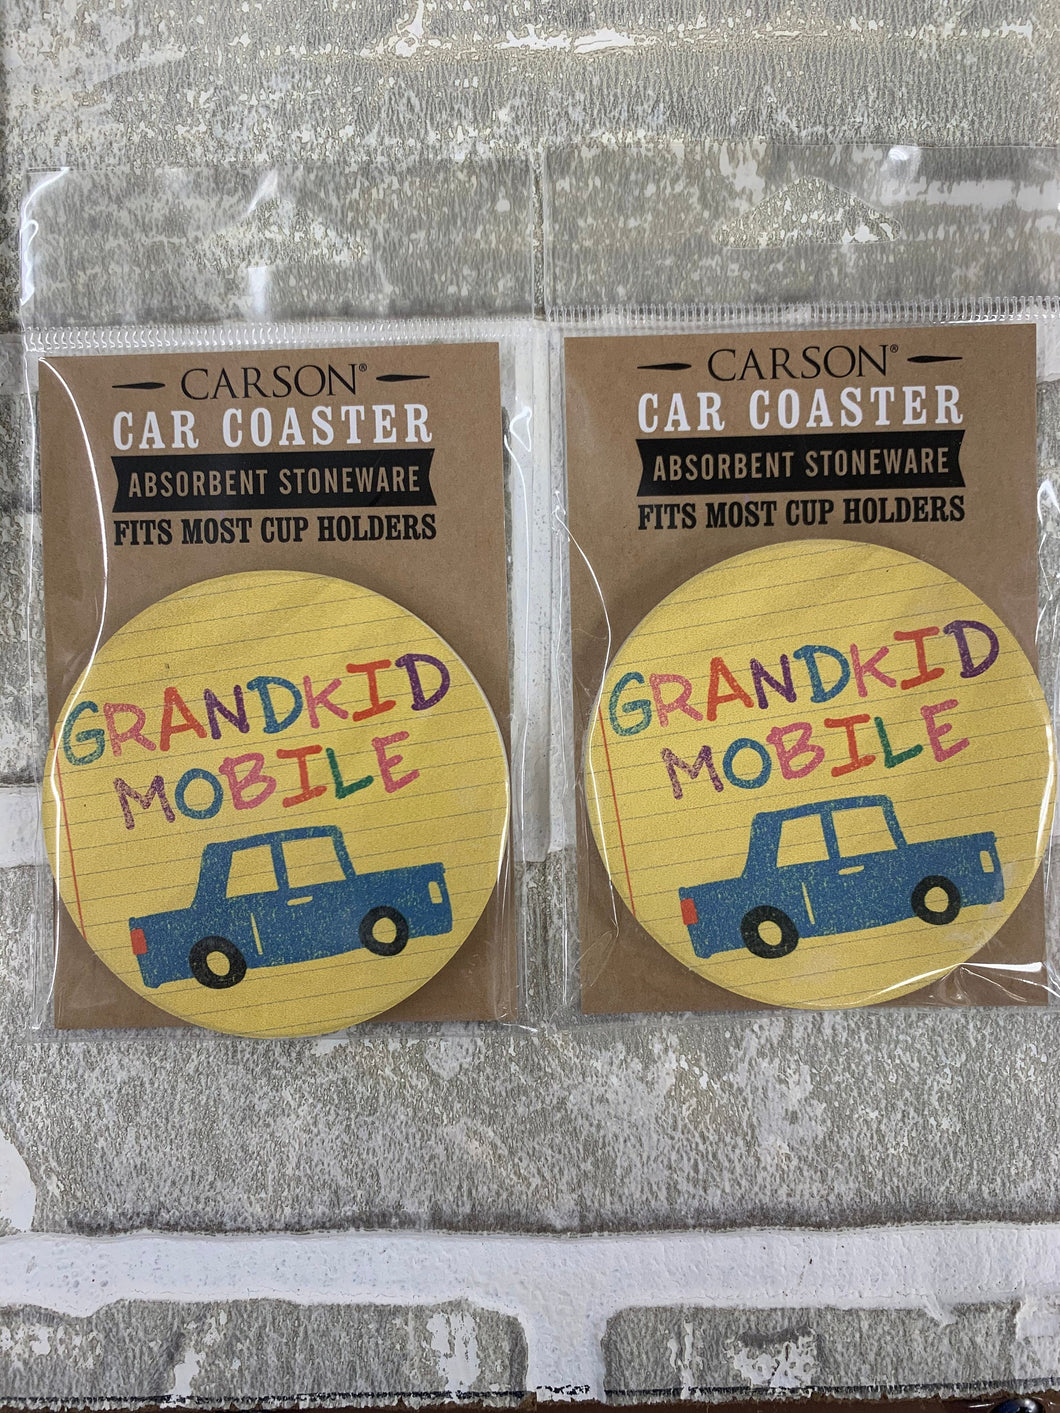 Grandkid mobile car coasters